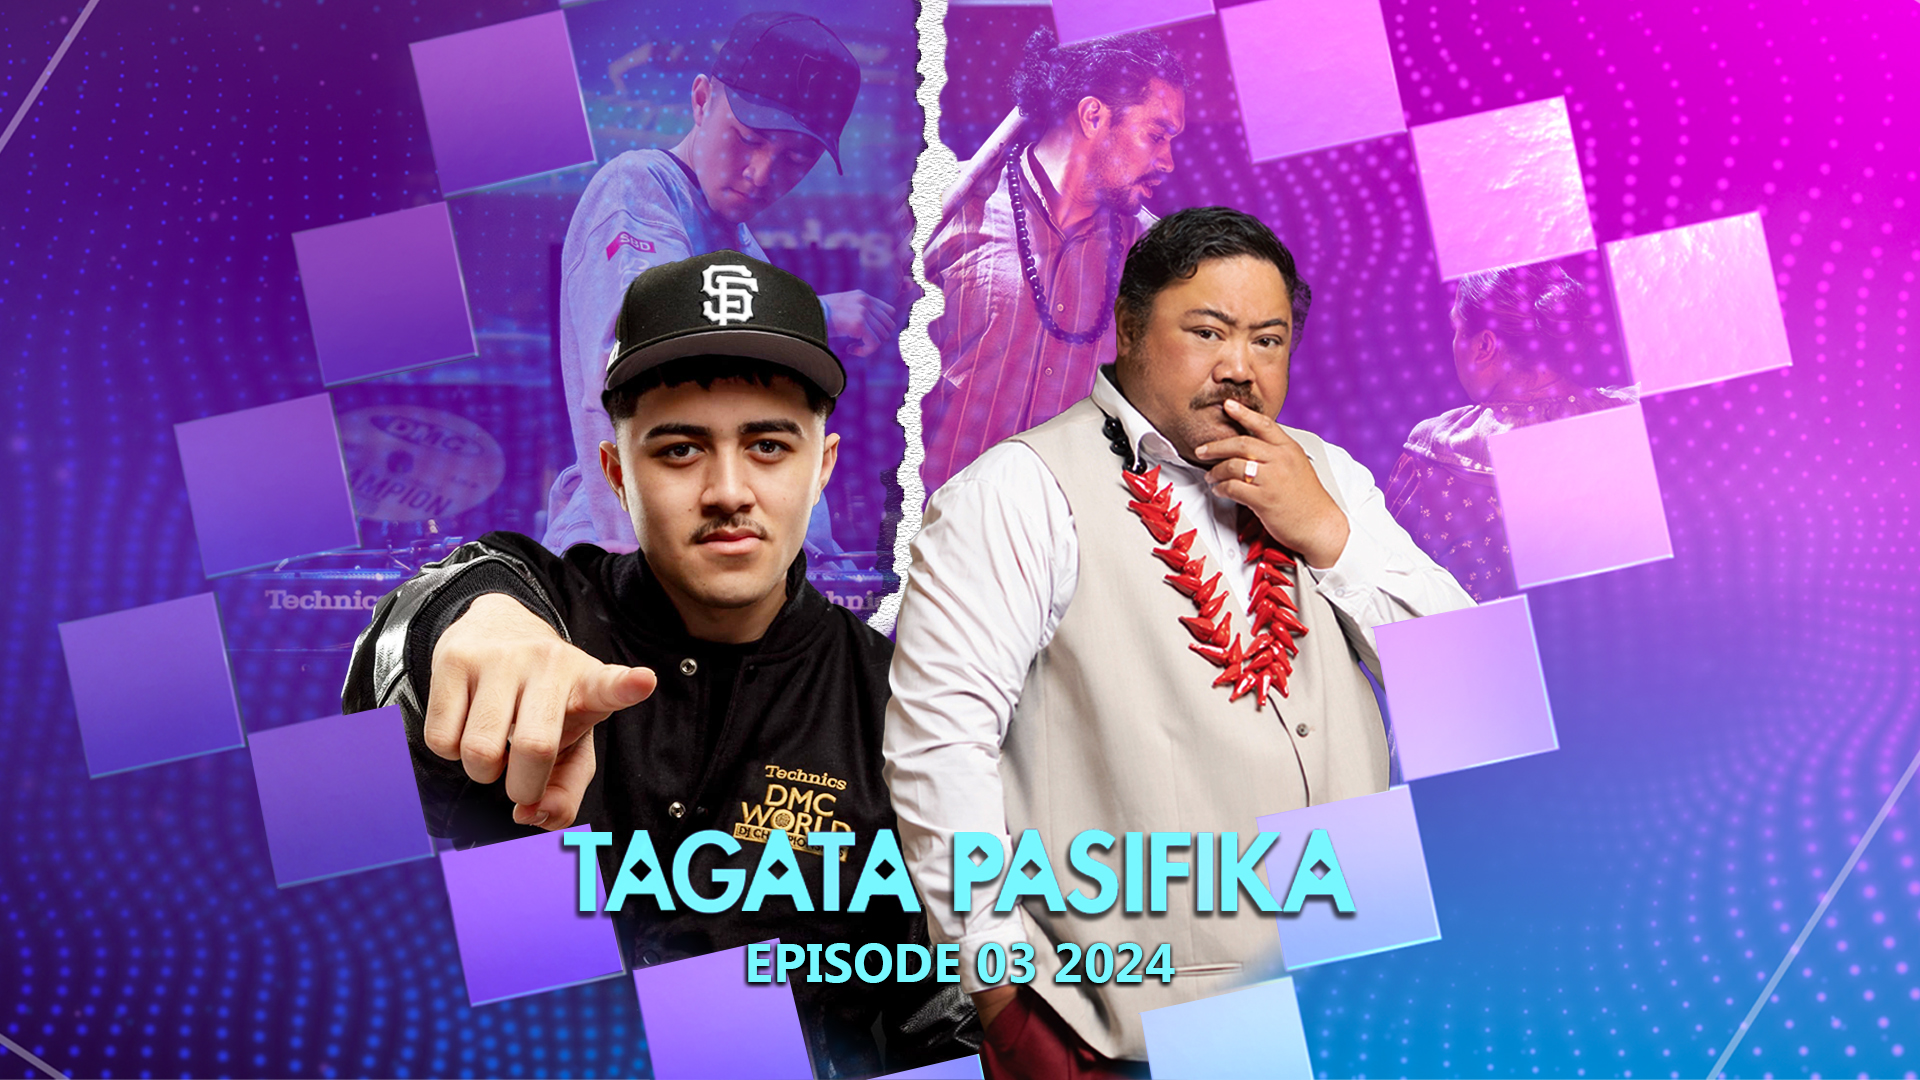 WATCH: Tagata Pasifika 2024 Episode 3